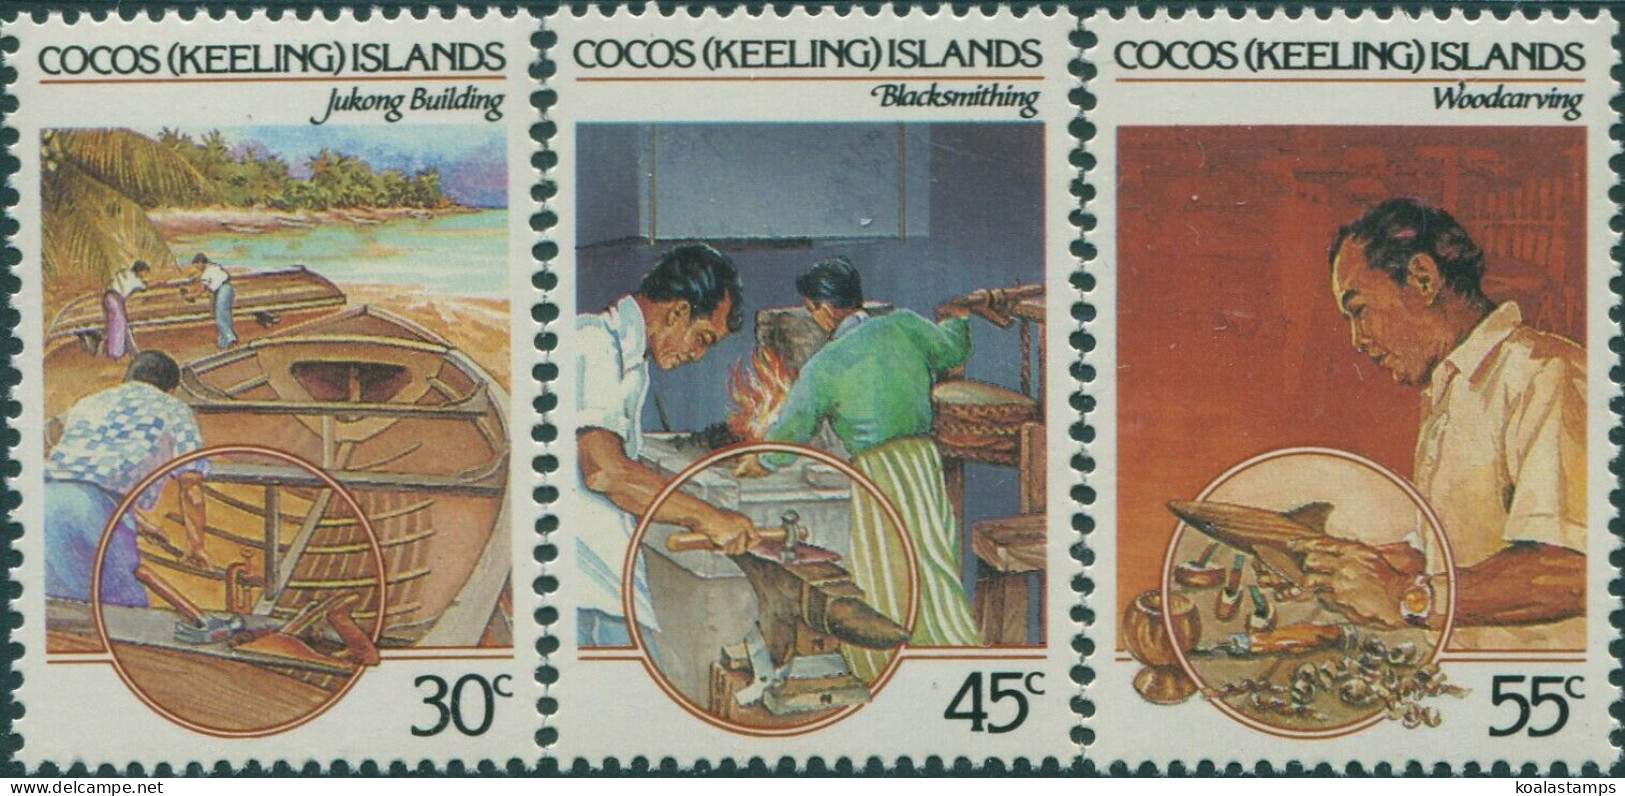 Cocos Islands 1985 SG126-128 Malay Culture Set MLH - Cocos (Keeling) Islands